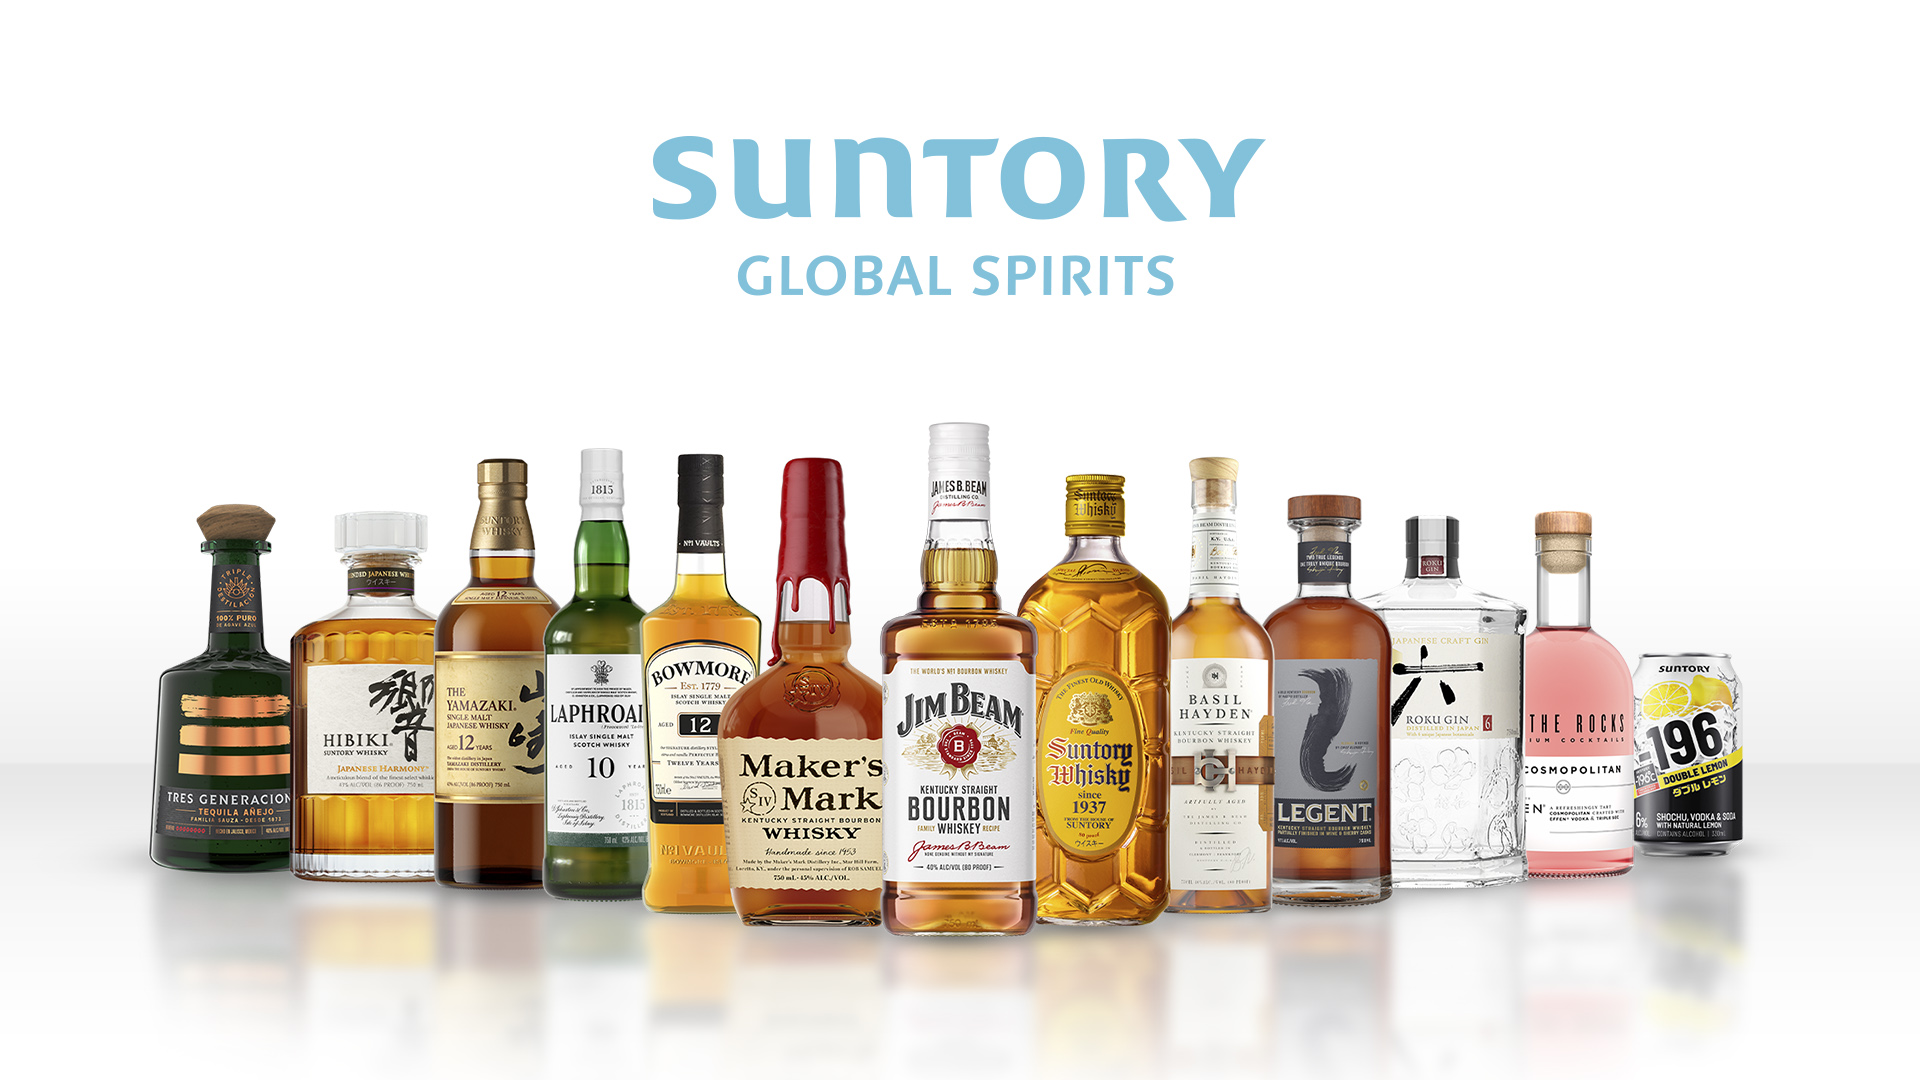 The Suntory Global Spirits portfolio with the company's new logo. Image courtesy Suntory Global Spirits.